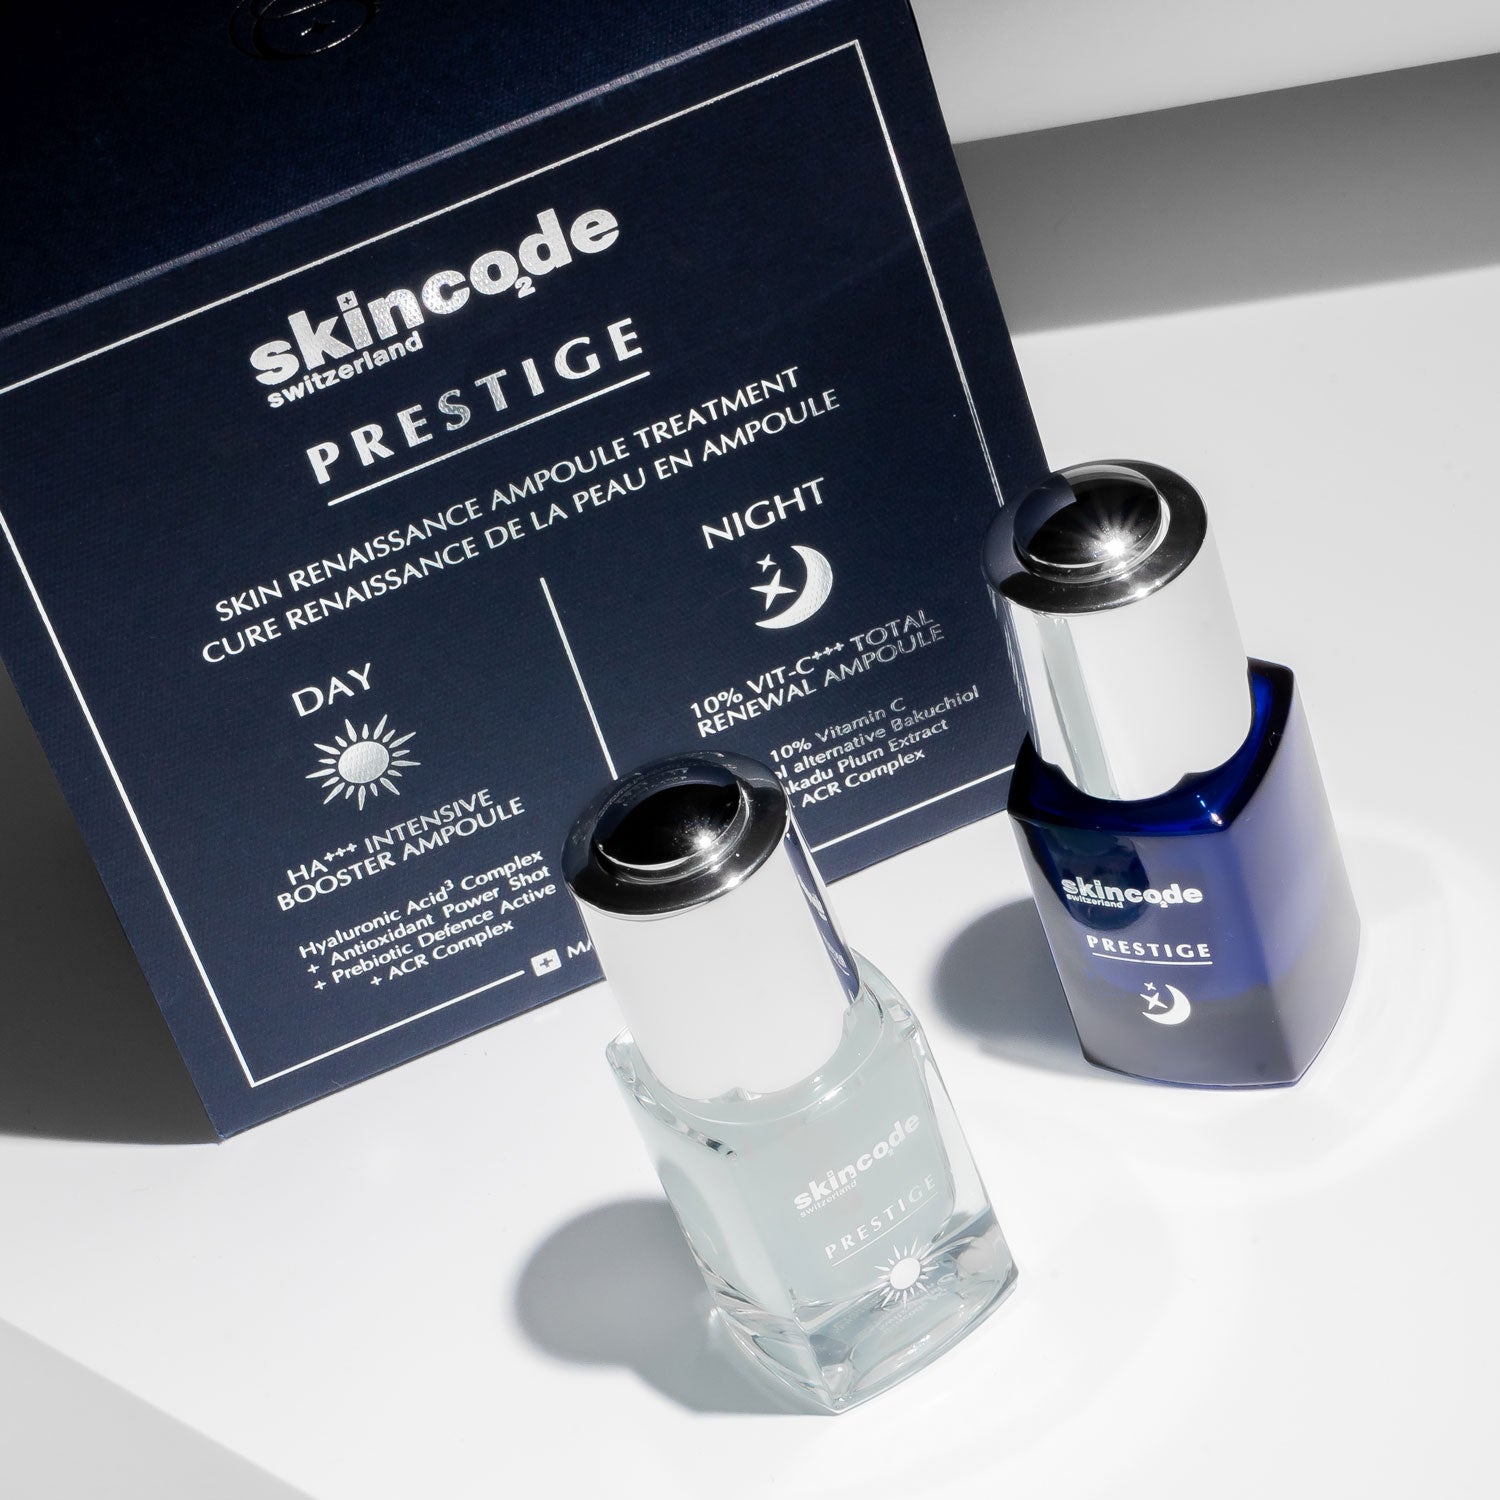 SkinCode Prestige, Skin Renaissance Ampoule Treatment